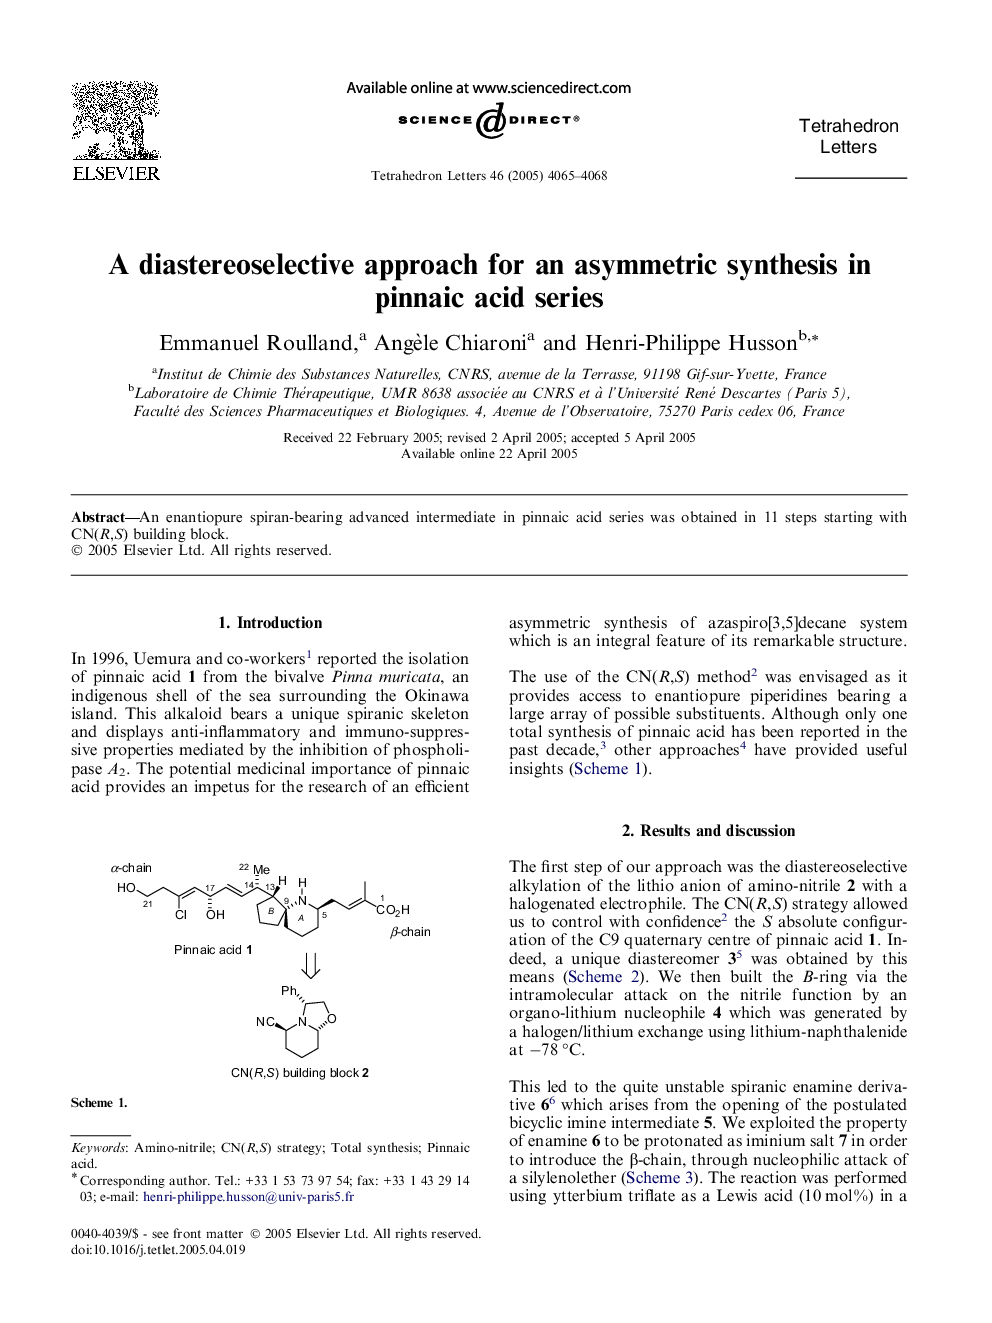 A diastereoselective approach for an asymmetric synthesis in pinnaic acid series